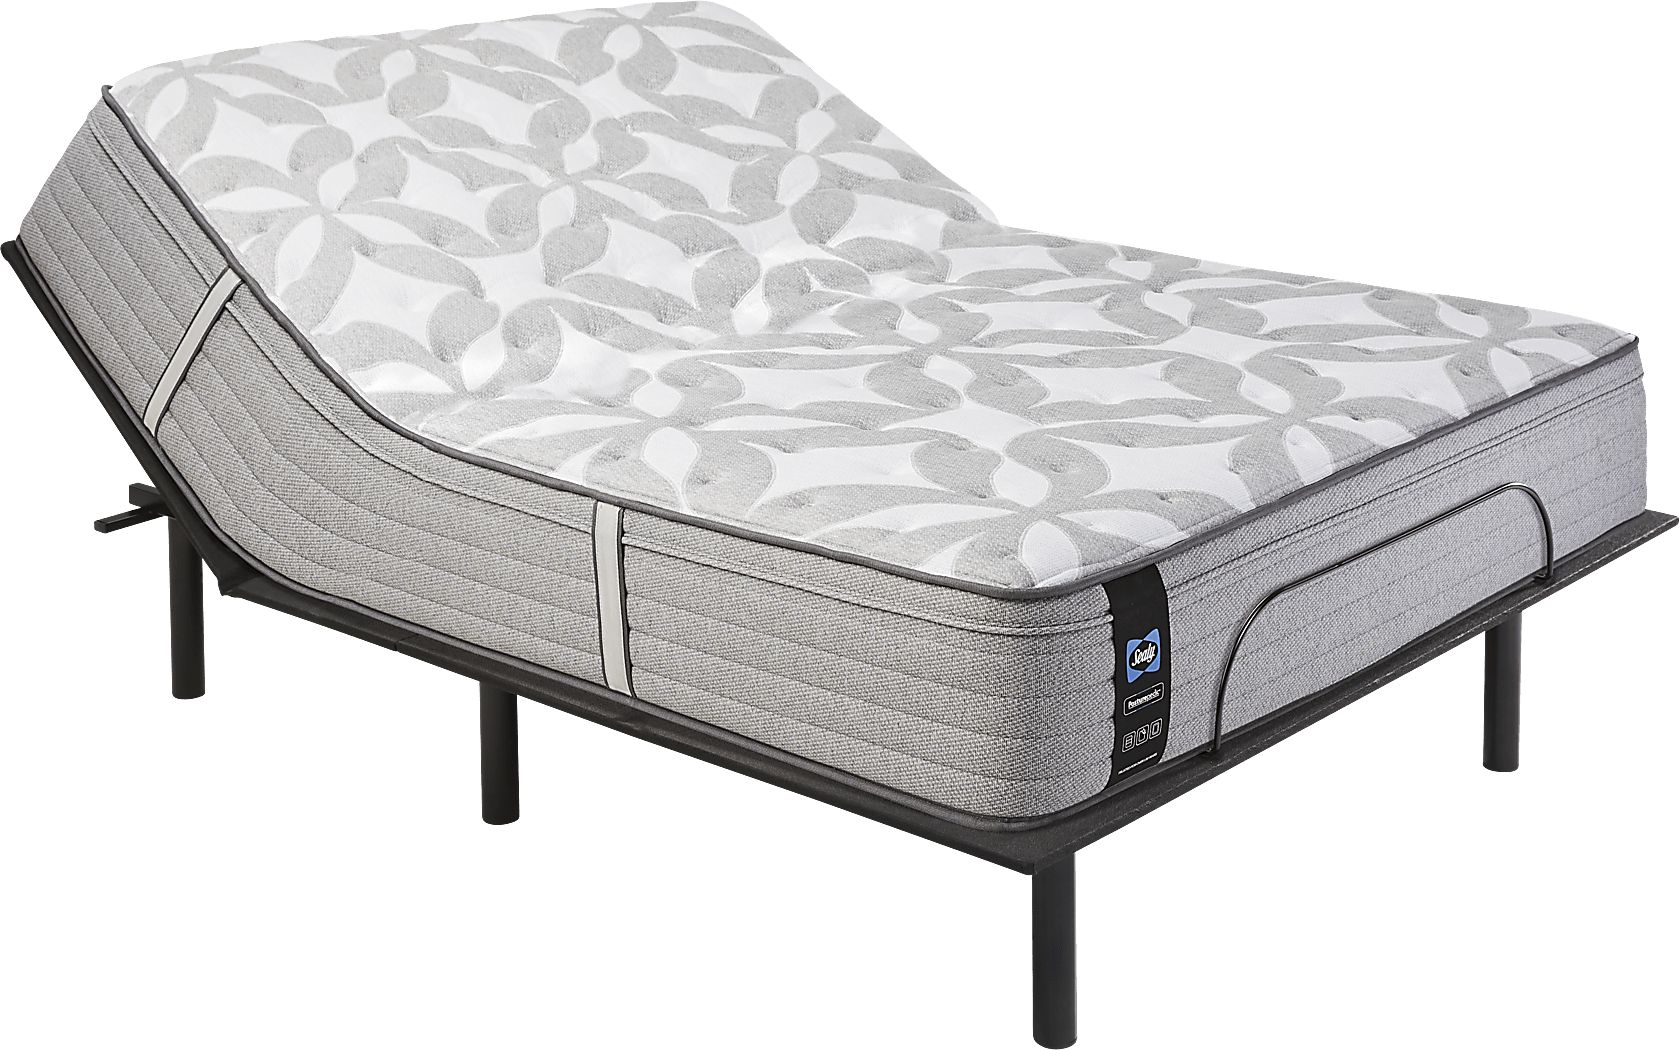 cost of sealy posturepedic mattress at ashley furniture